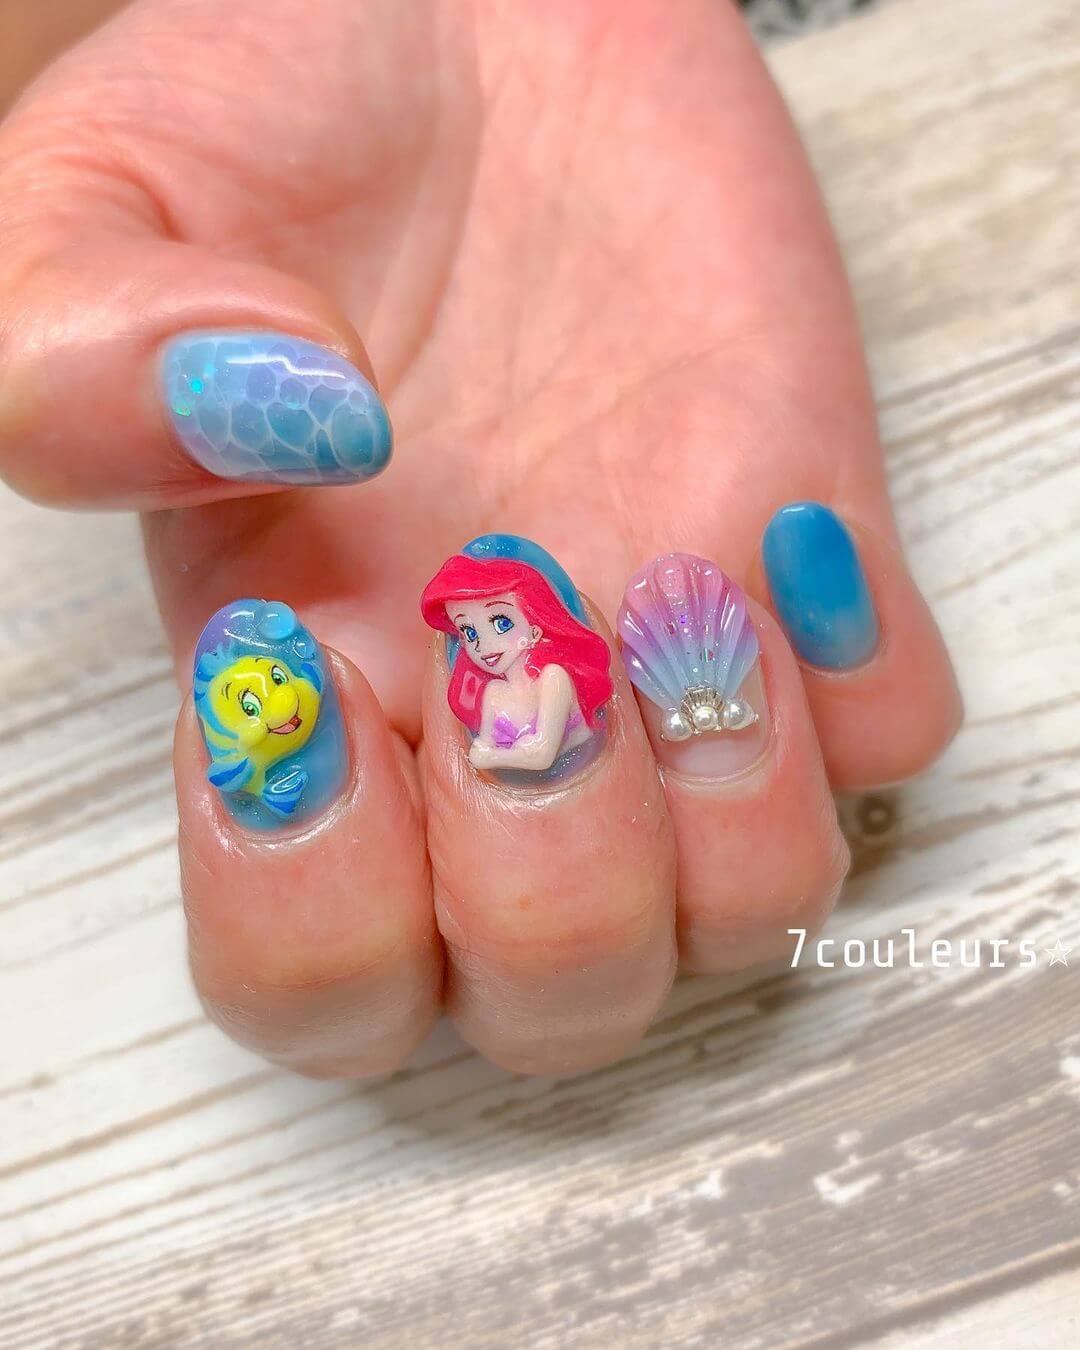 Disney Nail Art Designs Go all aqua with Disney's Mermaid Princess!